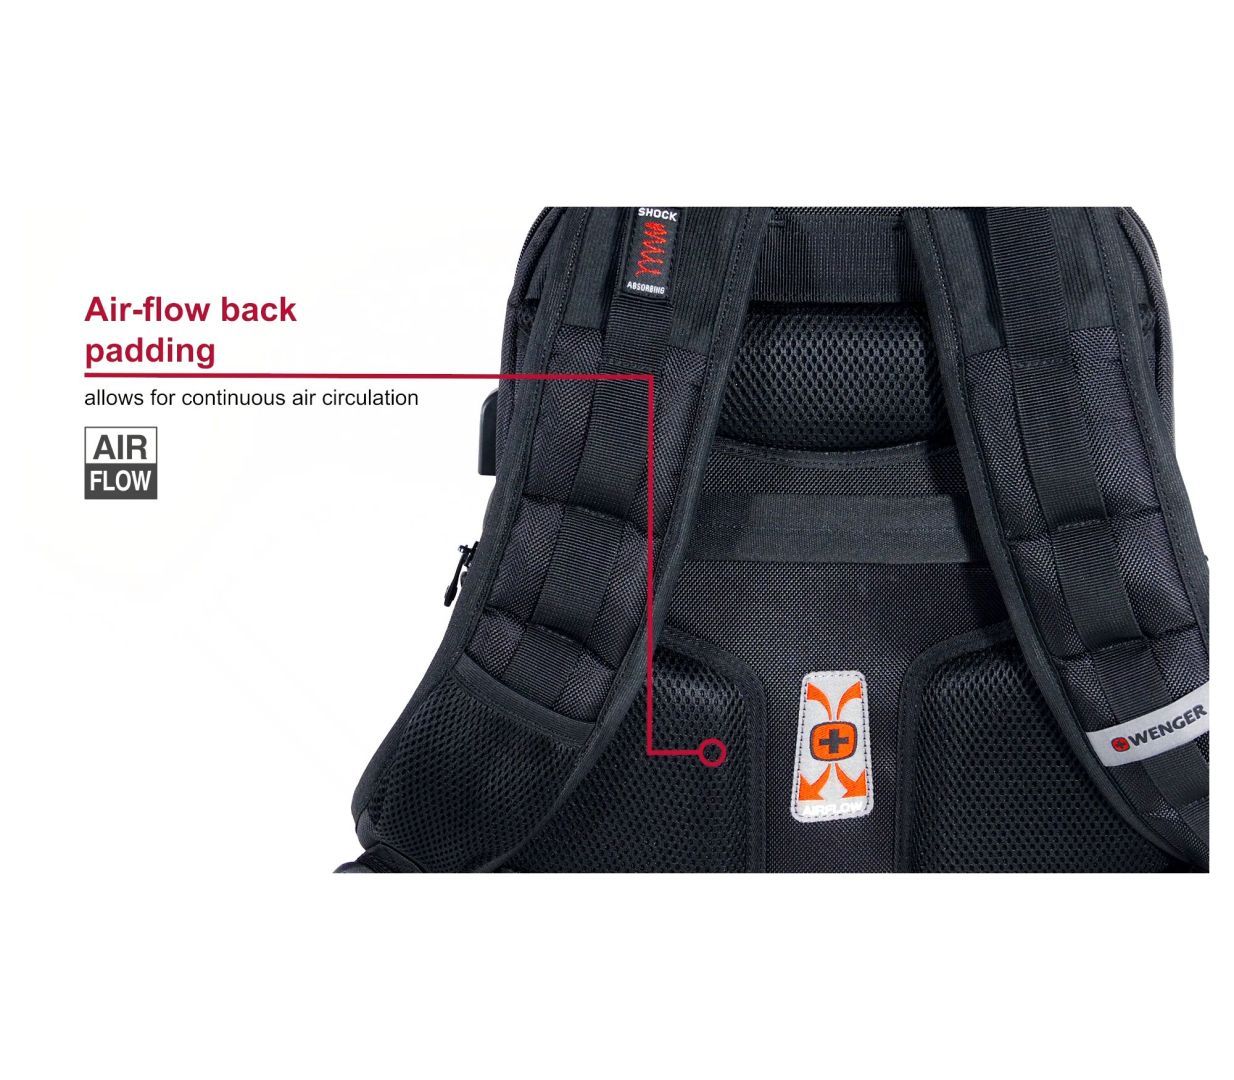 Wenger Pegasus Deluxe Laptop Backpack with Tablet Pocket 16" Black